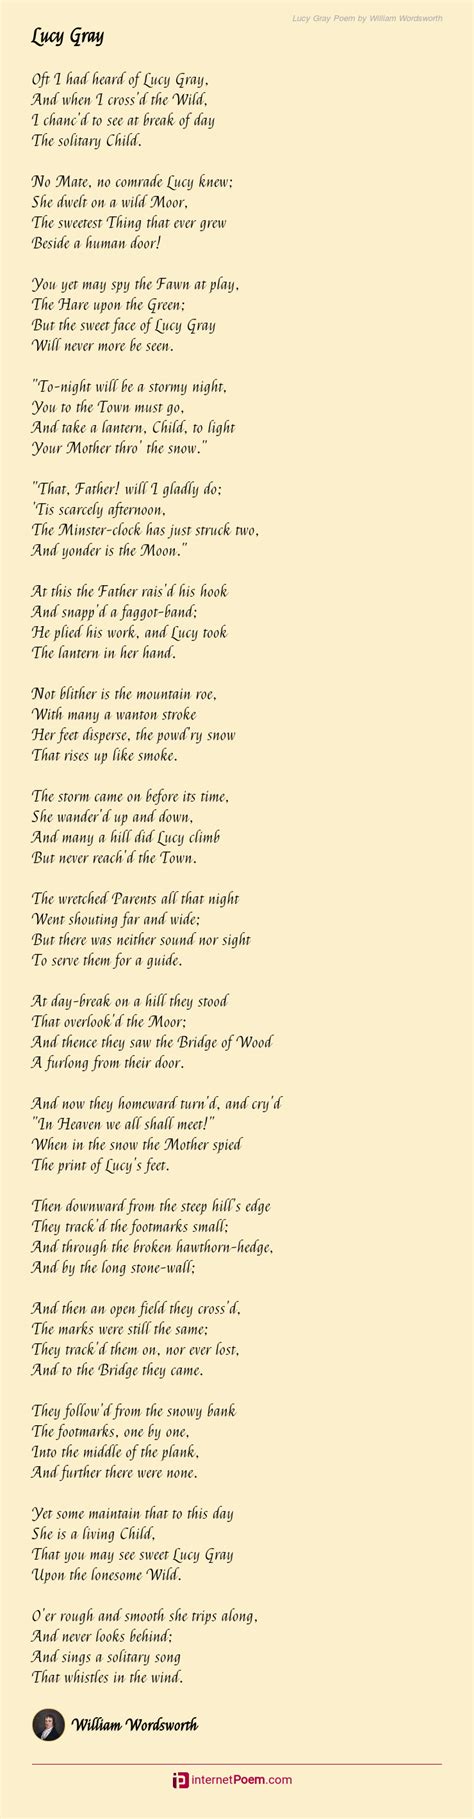 lucy gray poem  william wordsworth